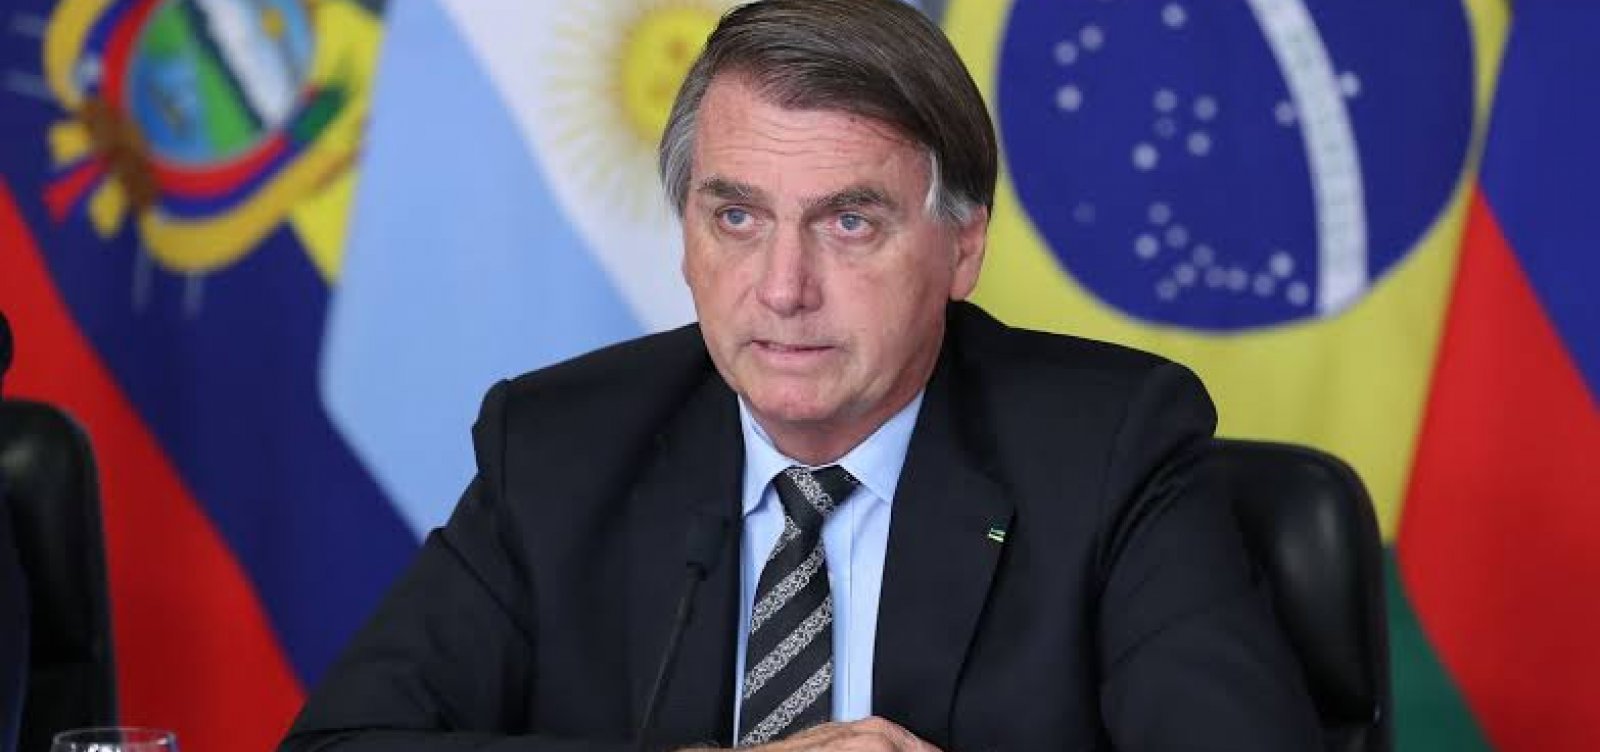 Lei Paulo Gustavo: "Rui Costa vai investir o quê em cultura na Bahia?", diz Bolsonaro 